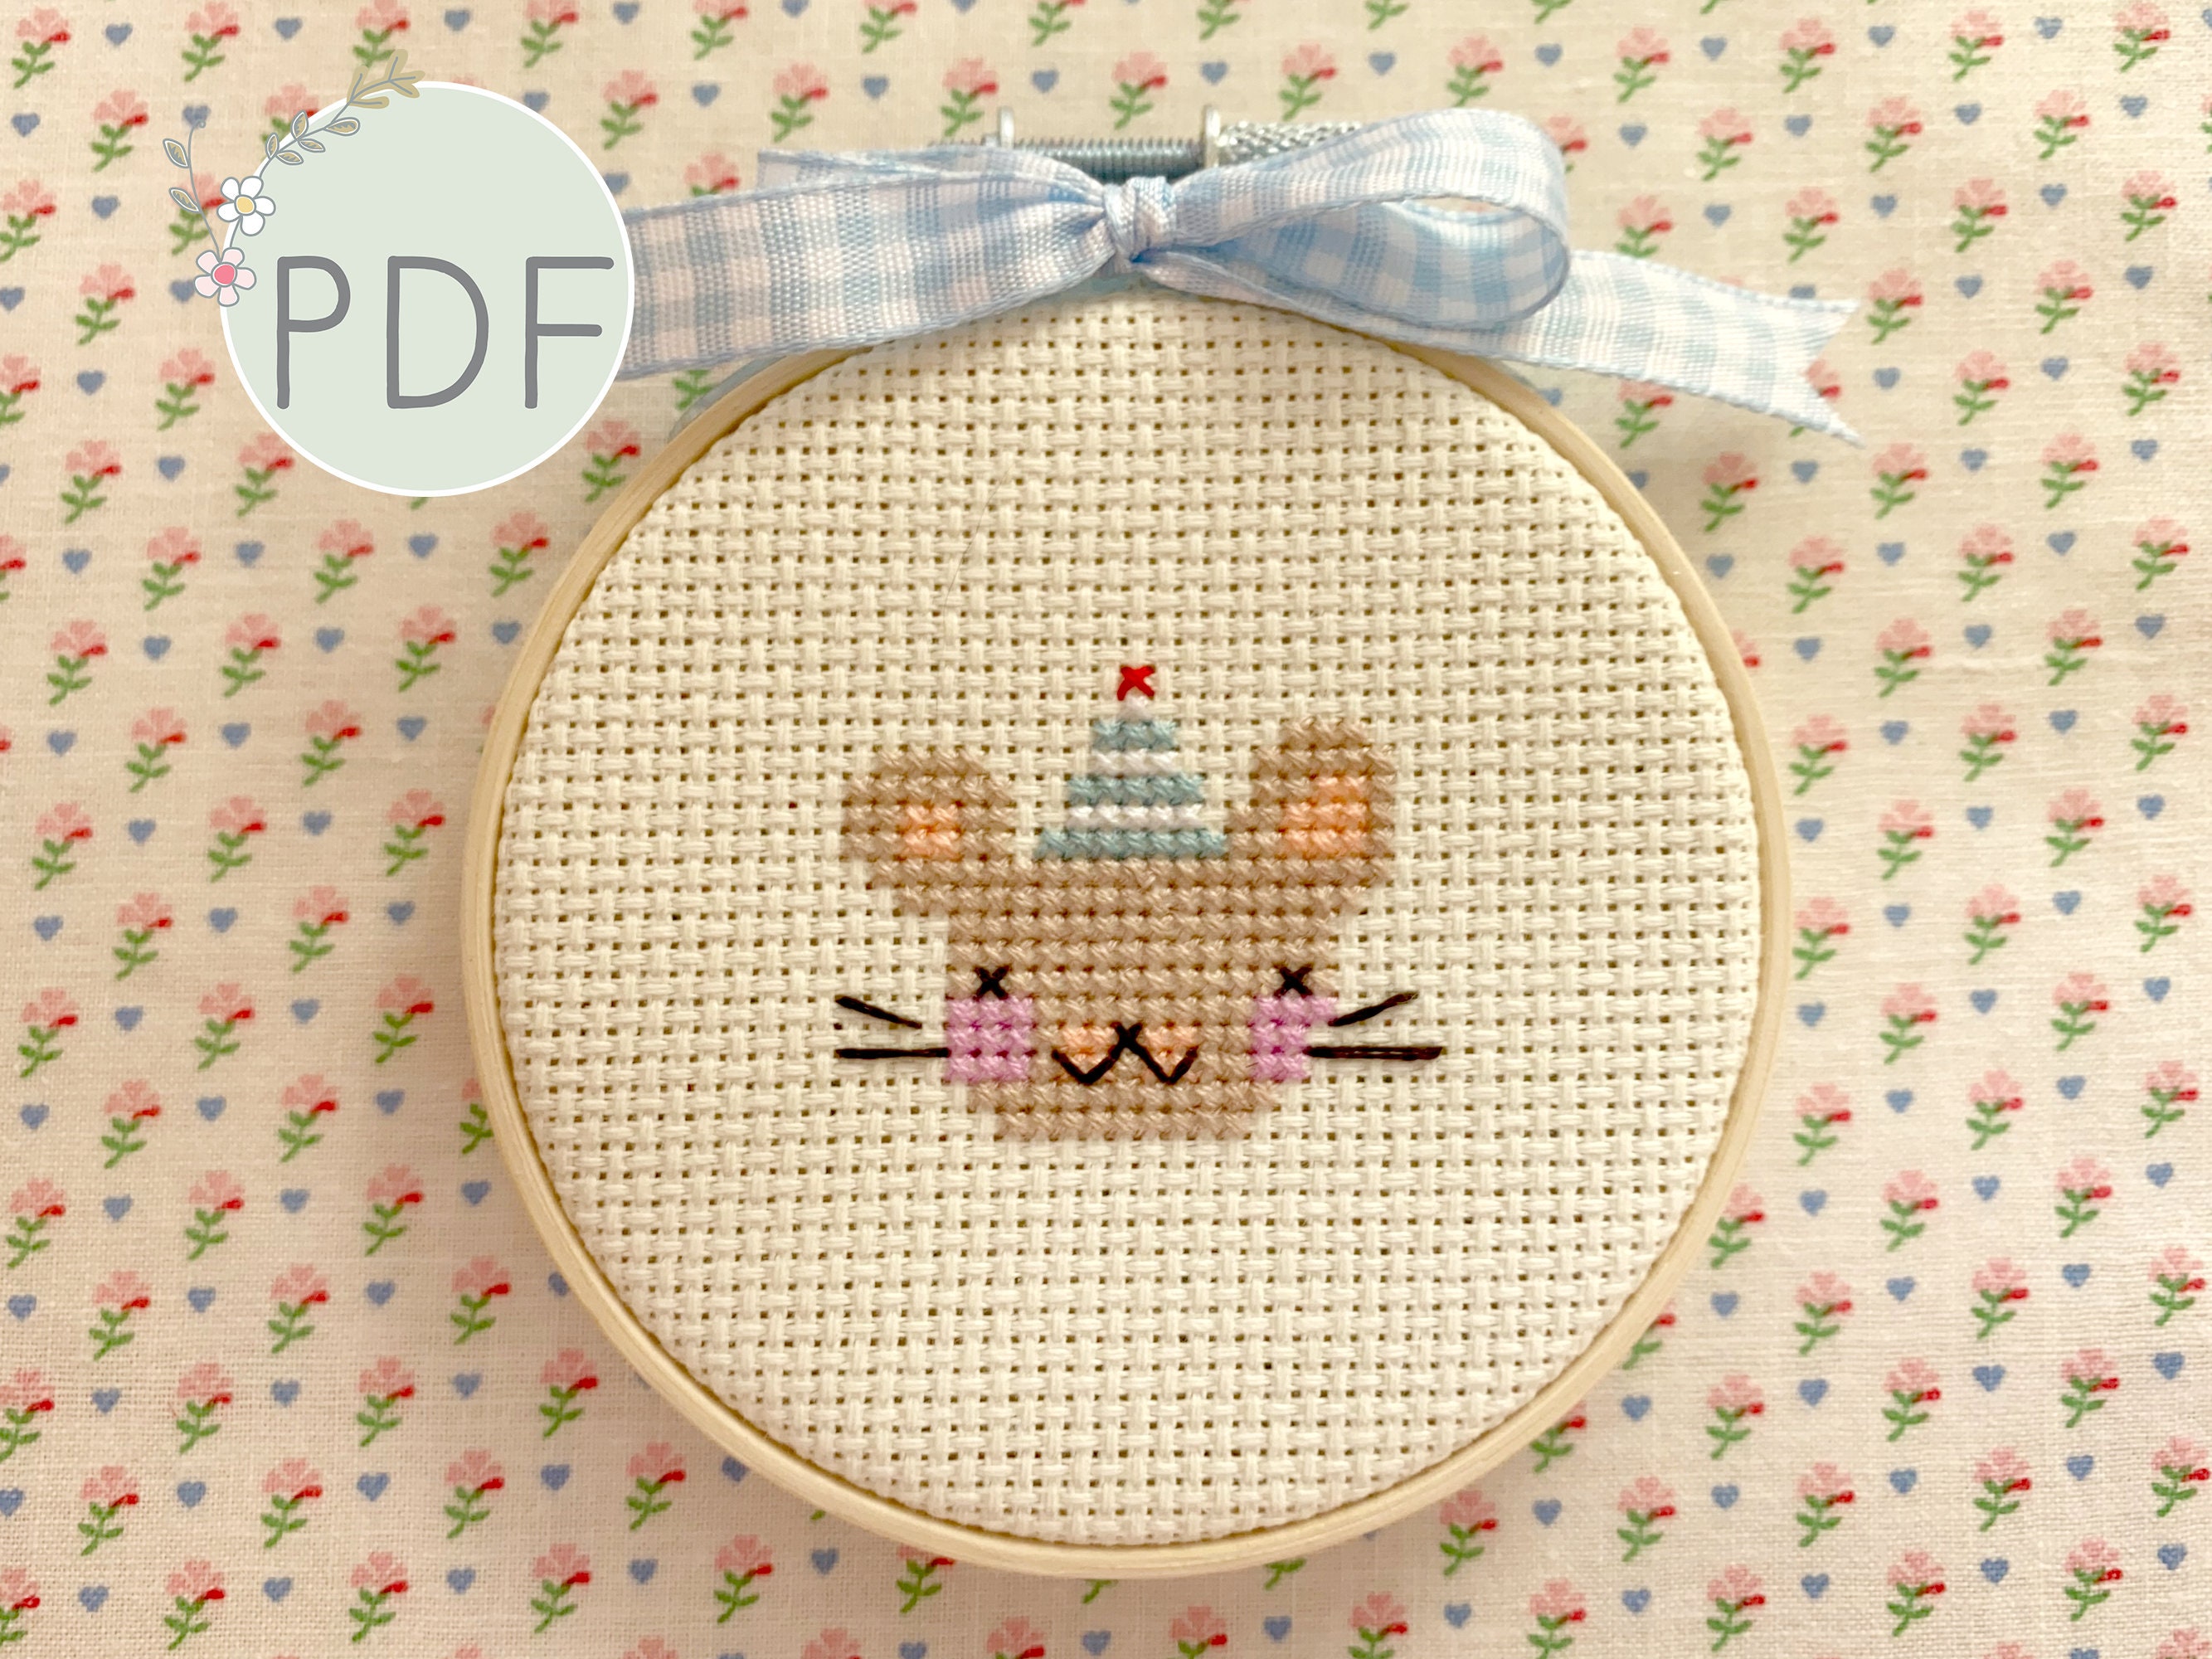 Happy Flower Mini Cross Stitch Kit  Posie: Patterns and Kits to Stitch by  Alicia Paulson